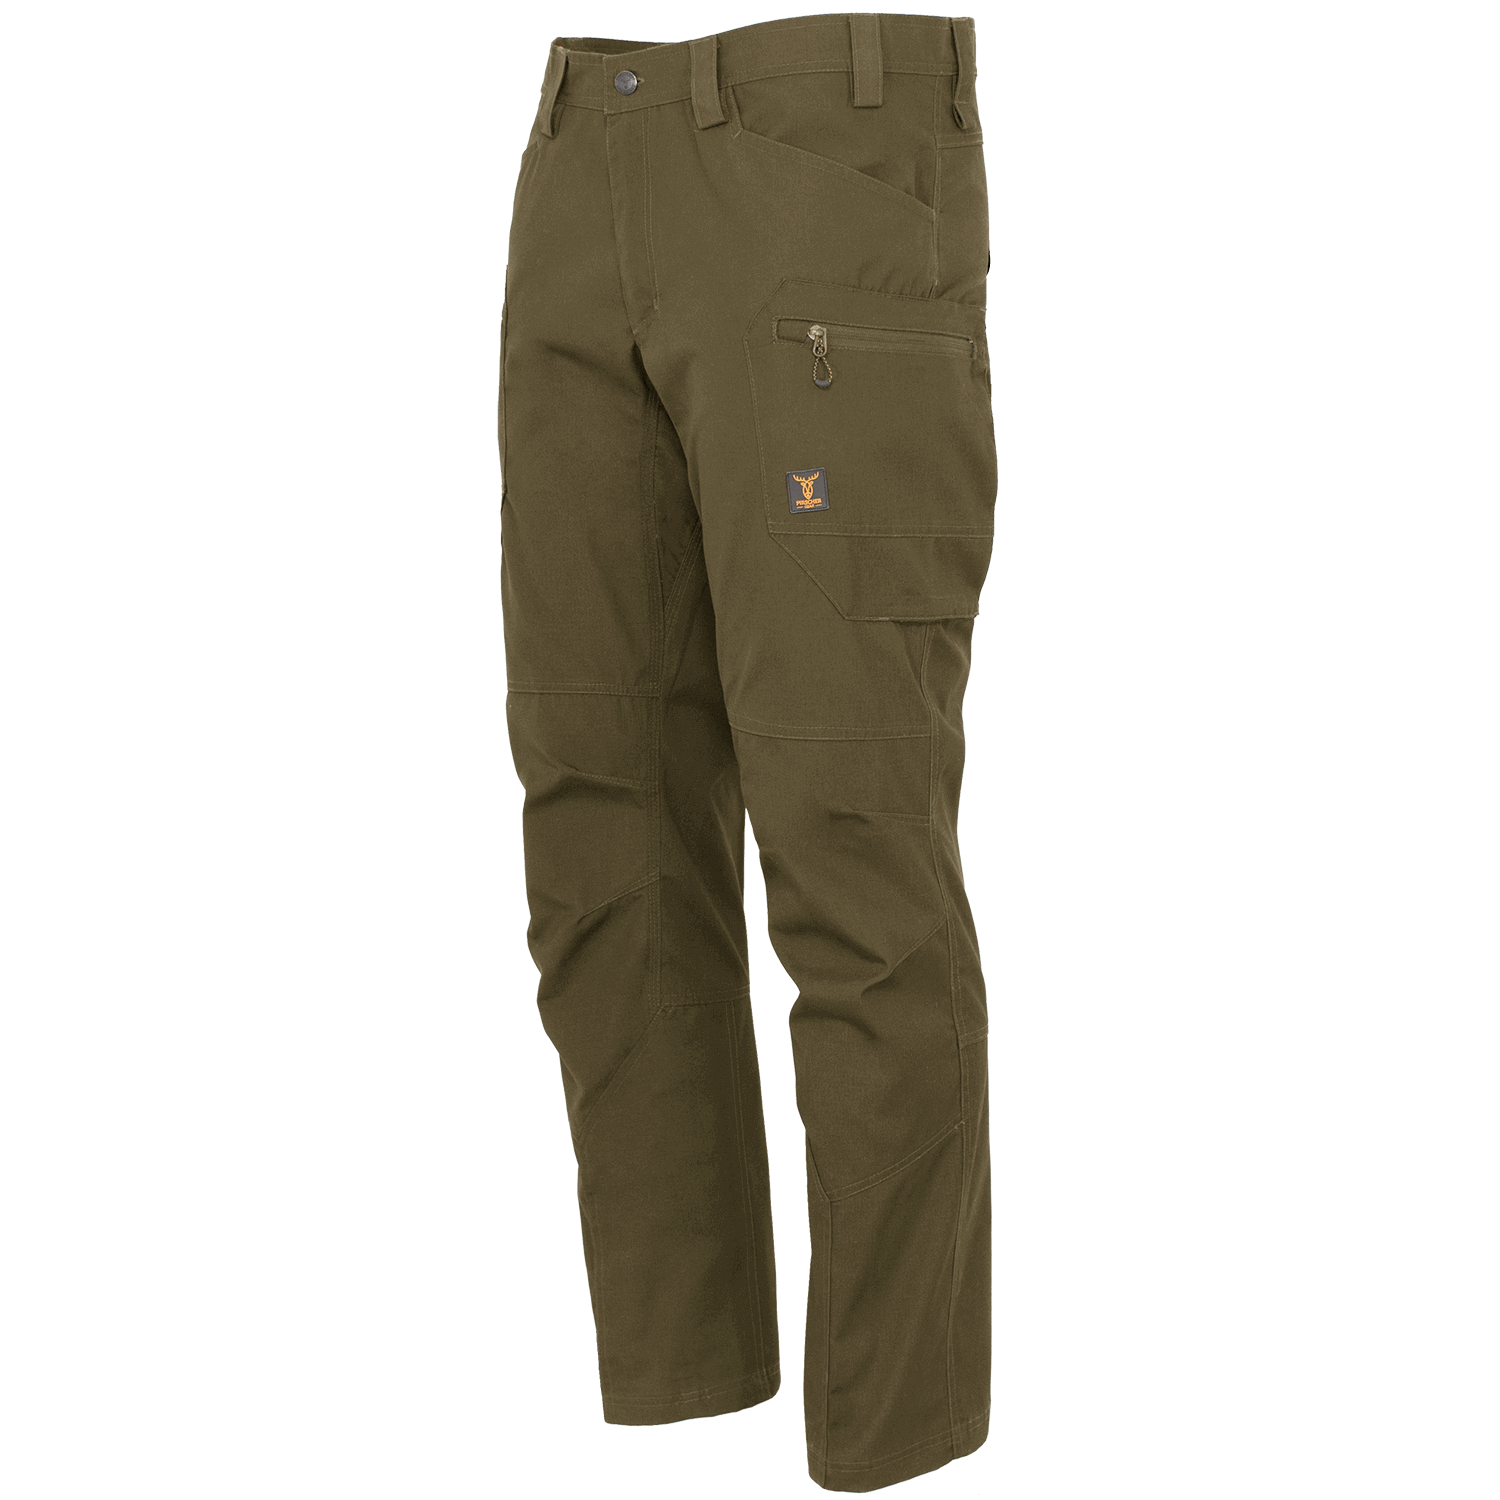 Pirscher Gear Territory Pants - Summer Hunting Clothing